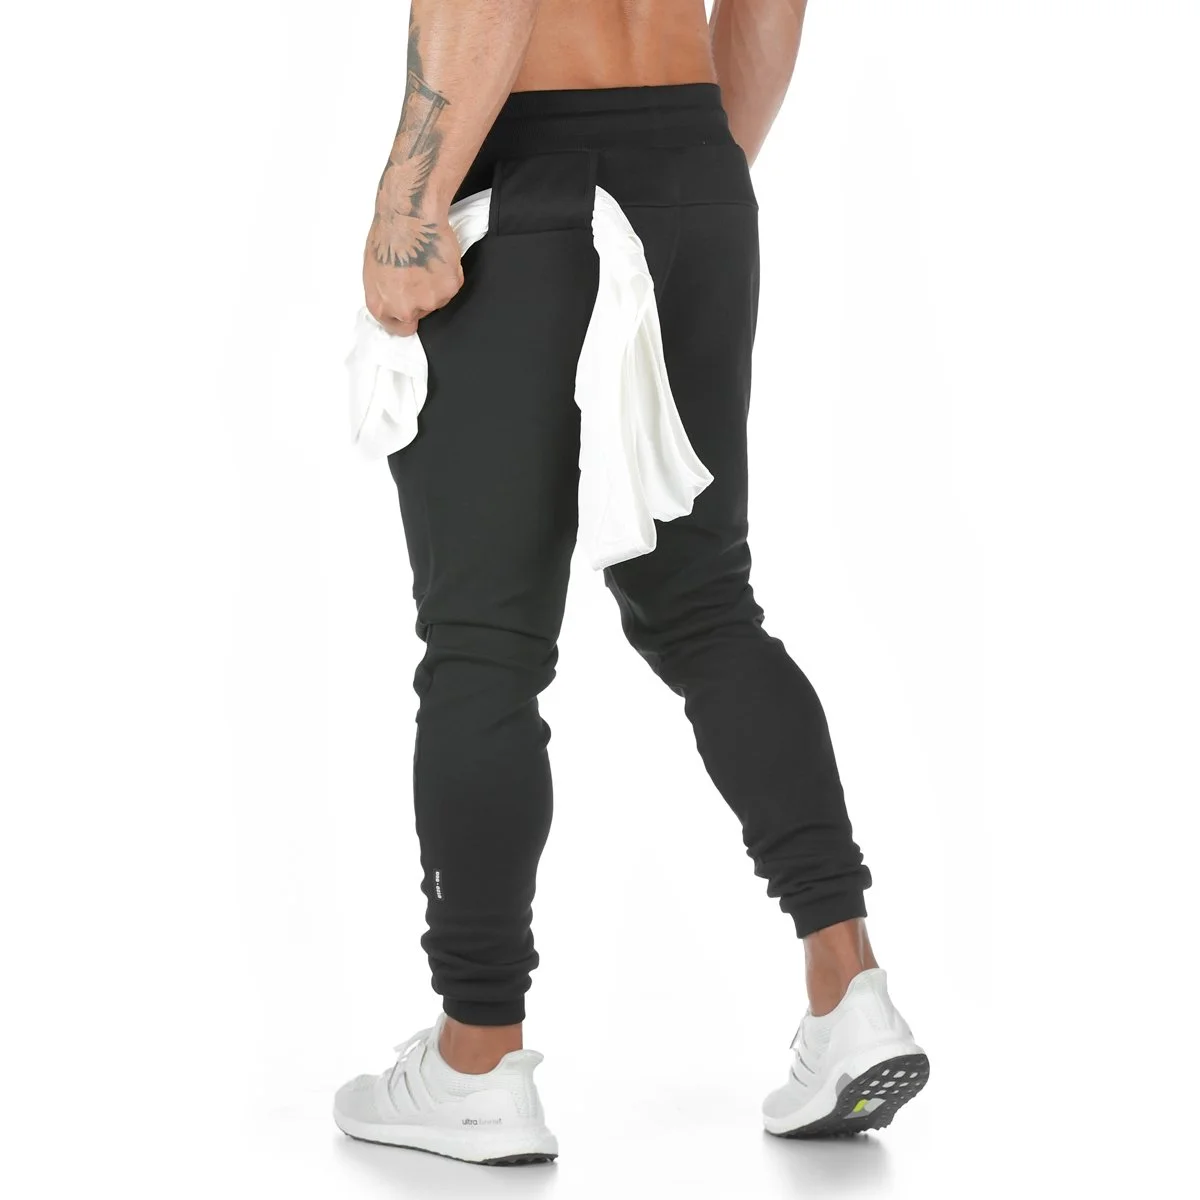 New Cotton Pants Running Tights Men Sporting Leggings Workout Sweatpants Joggers For Men Jogging Leggings Gyms Pants - Color: Black